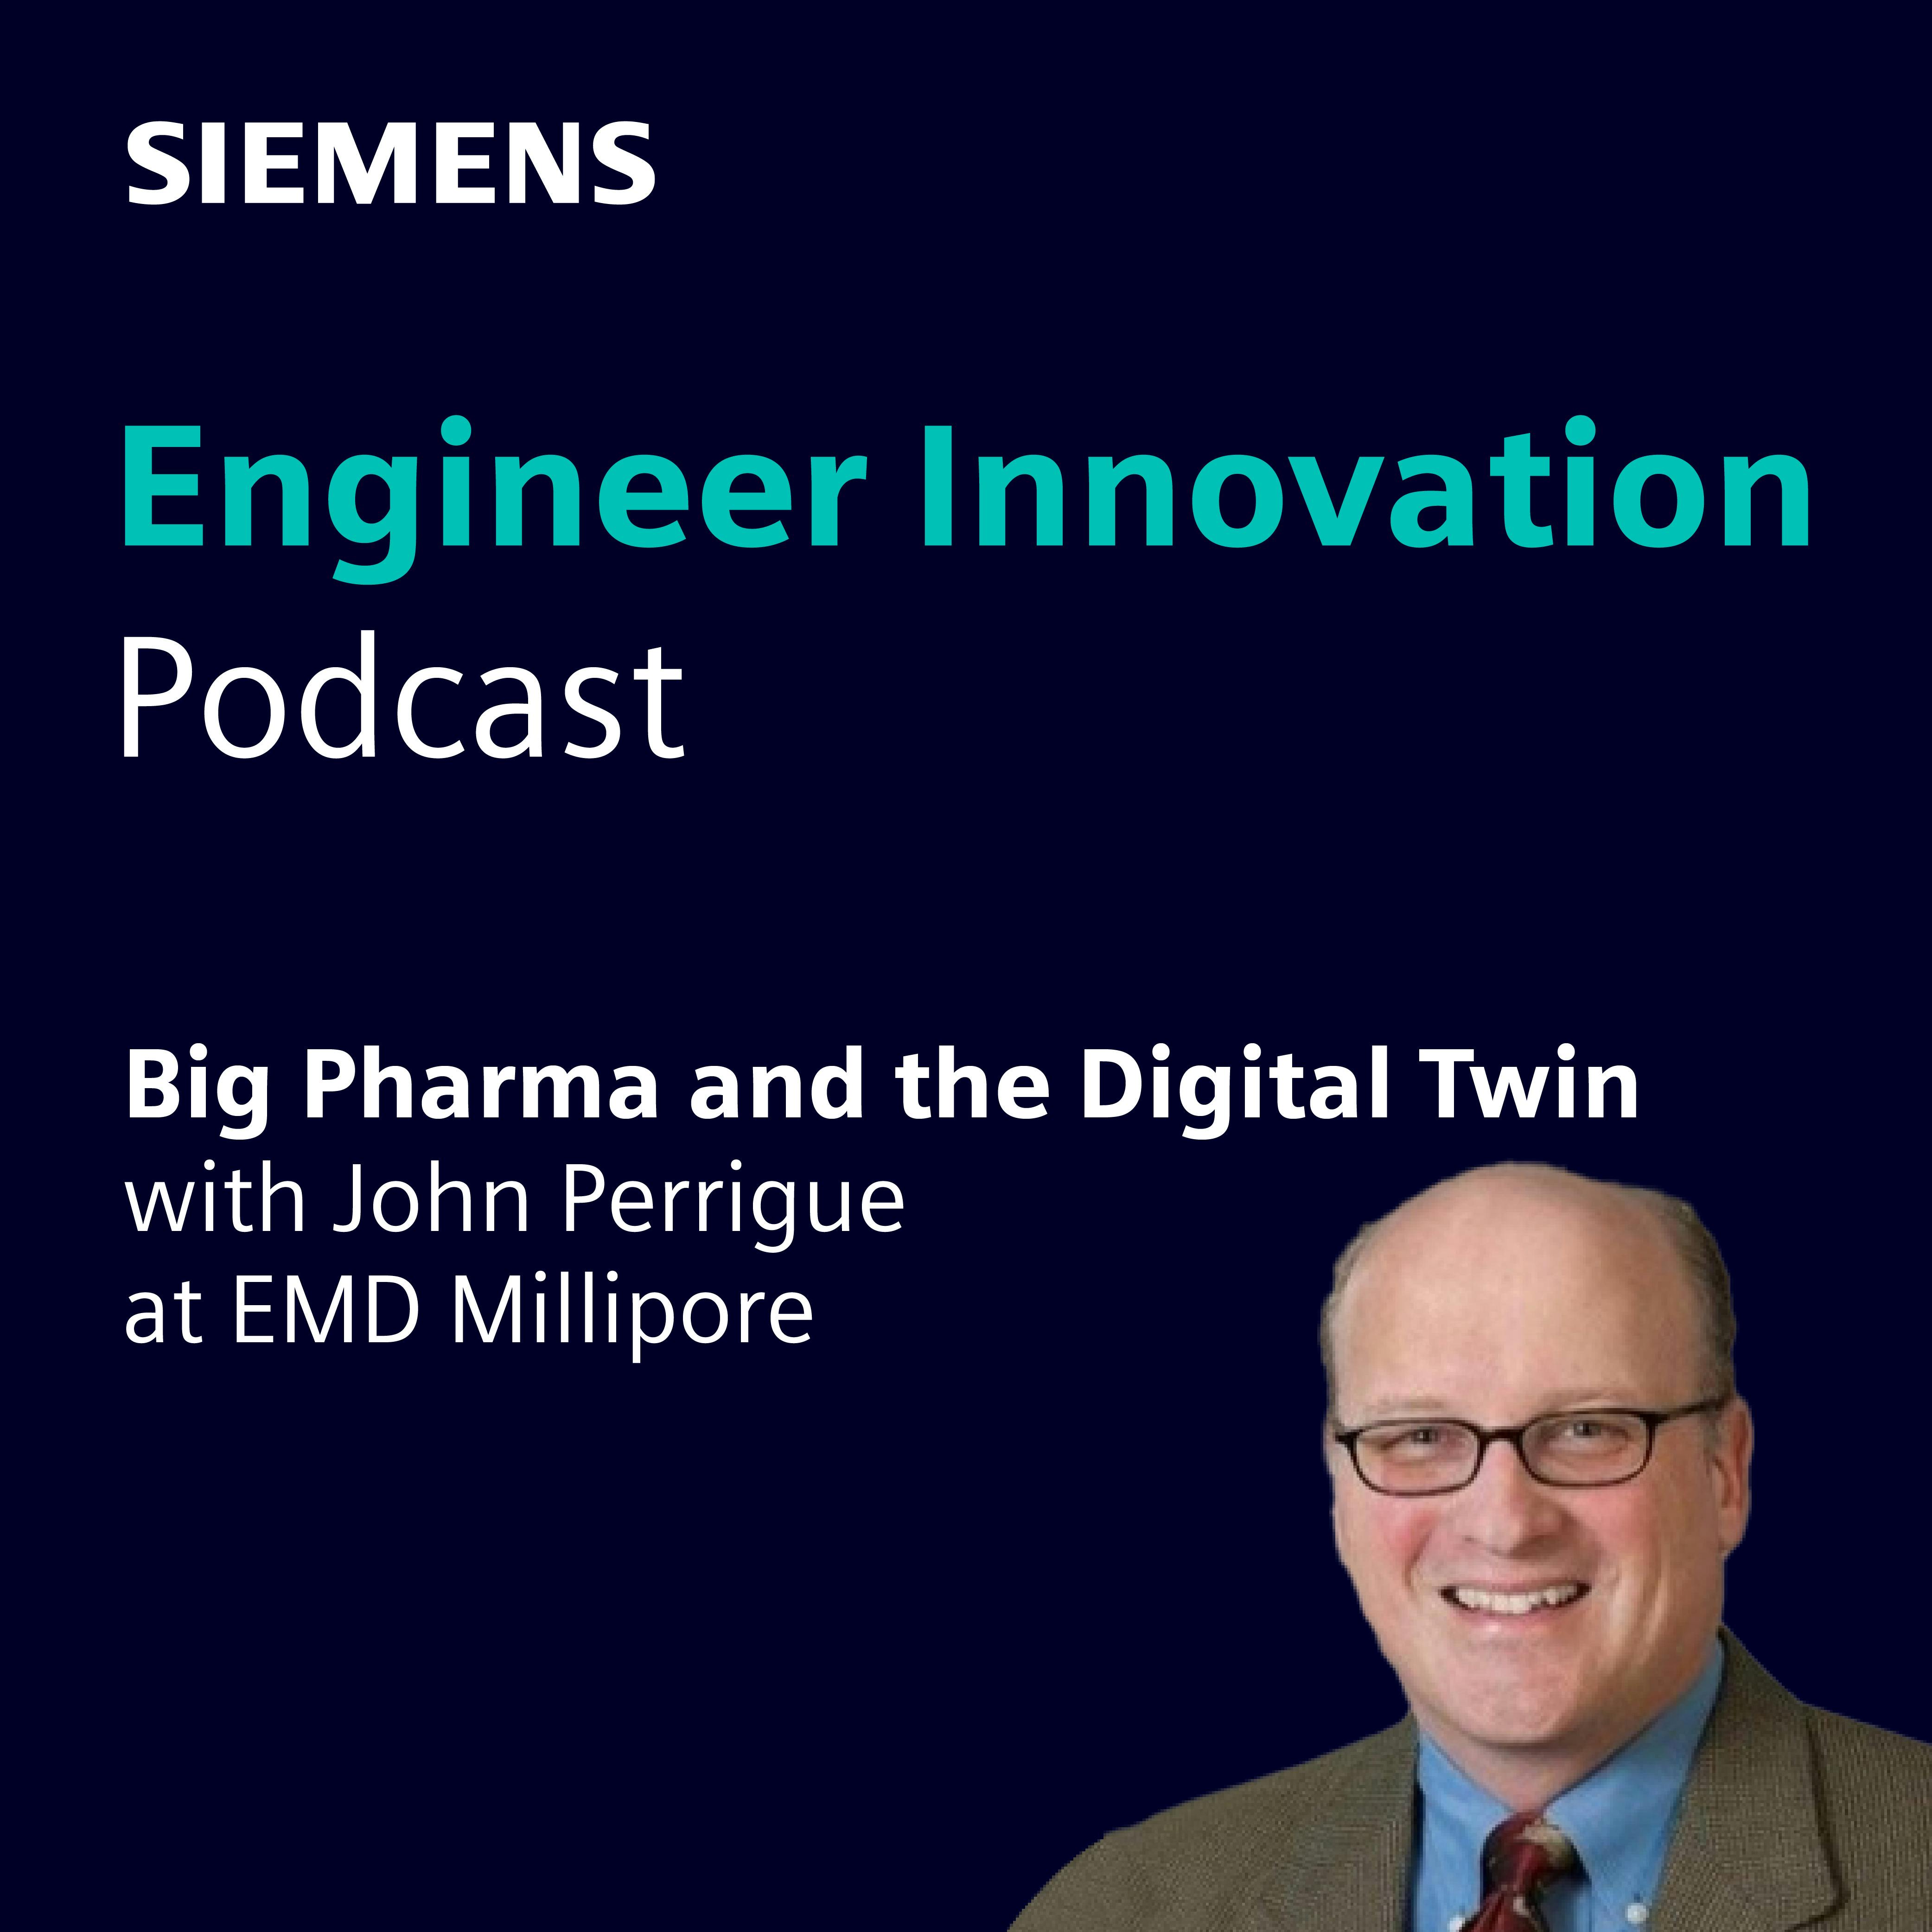 Big Pharma and the Digital Twin